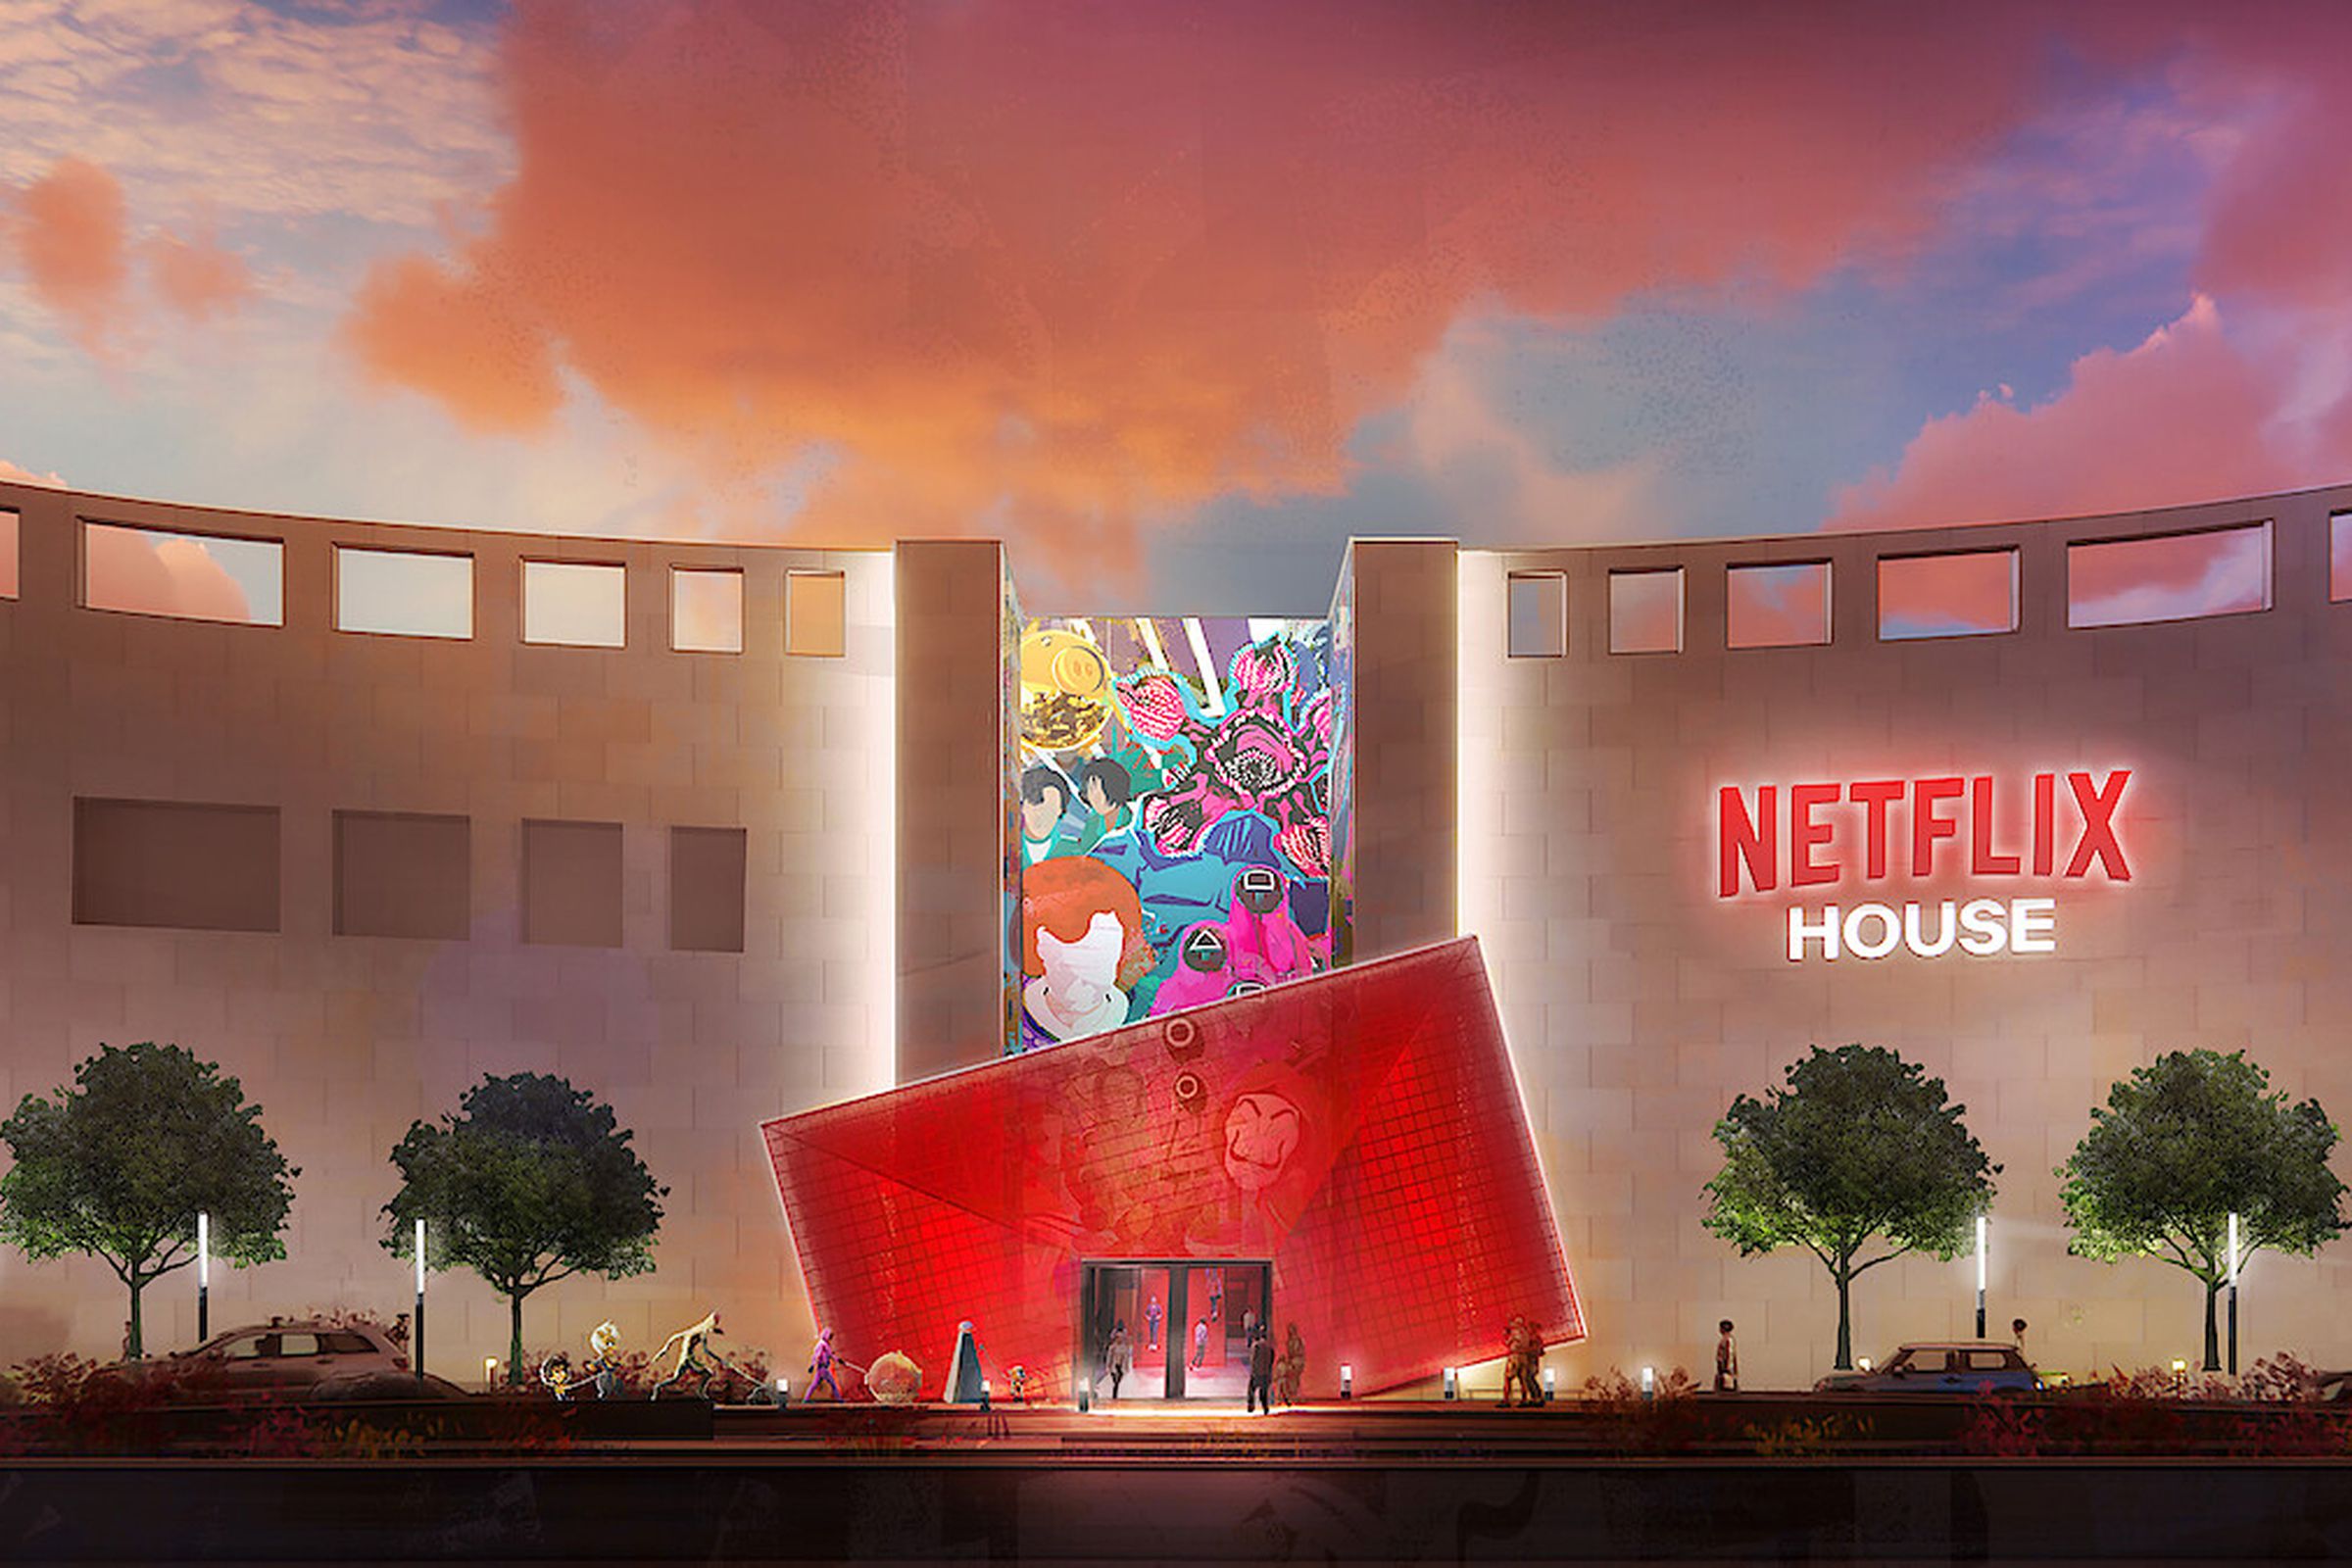 An artist’s conceptual illustration of a Netflix House building at dusk.